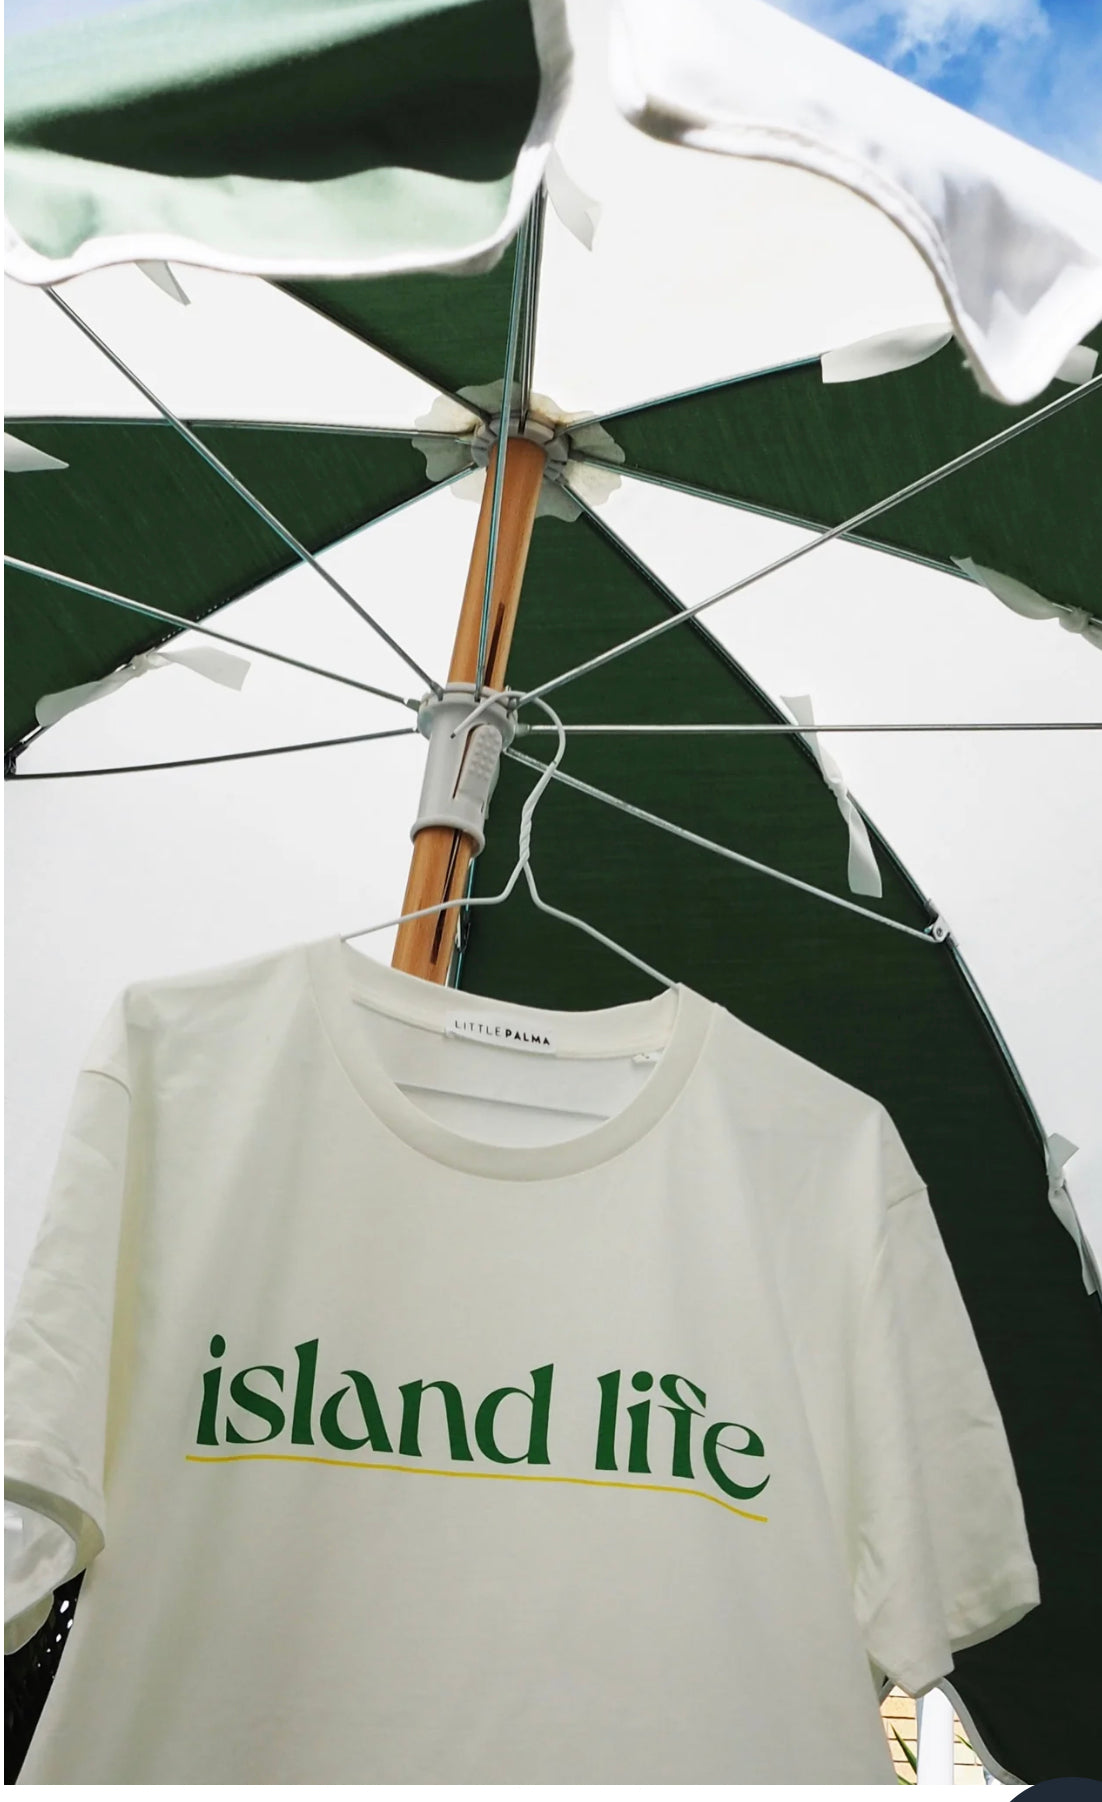 ISLAND LIFE T-SHIRT